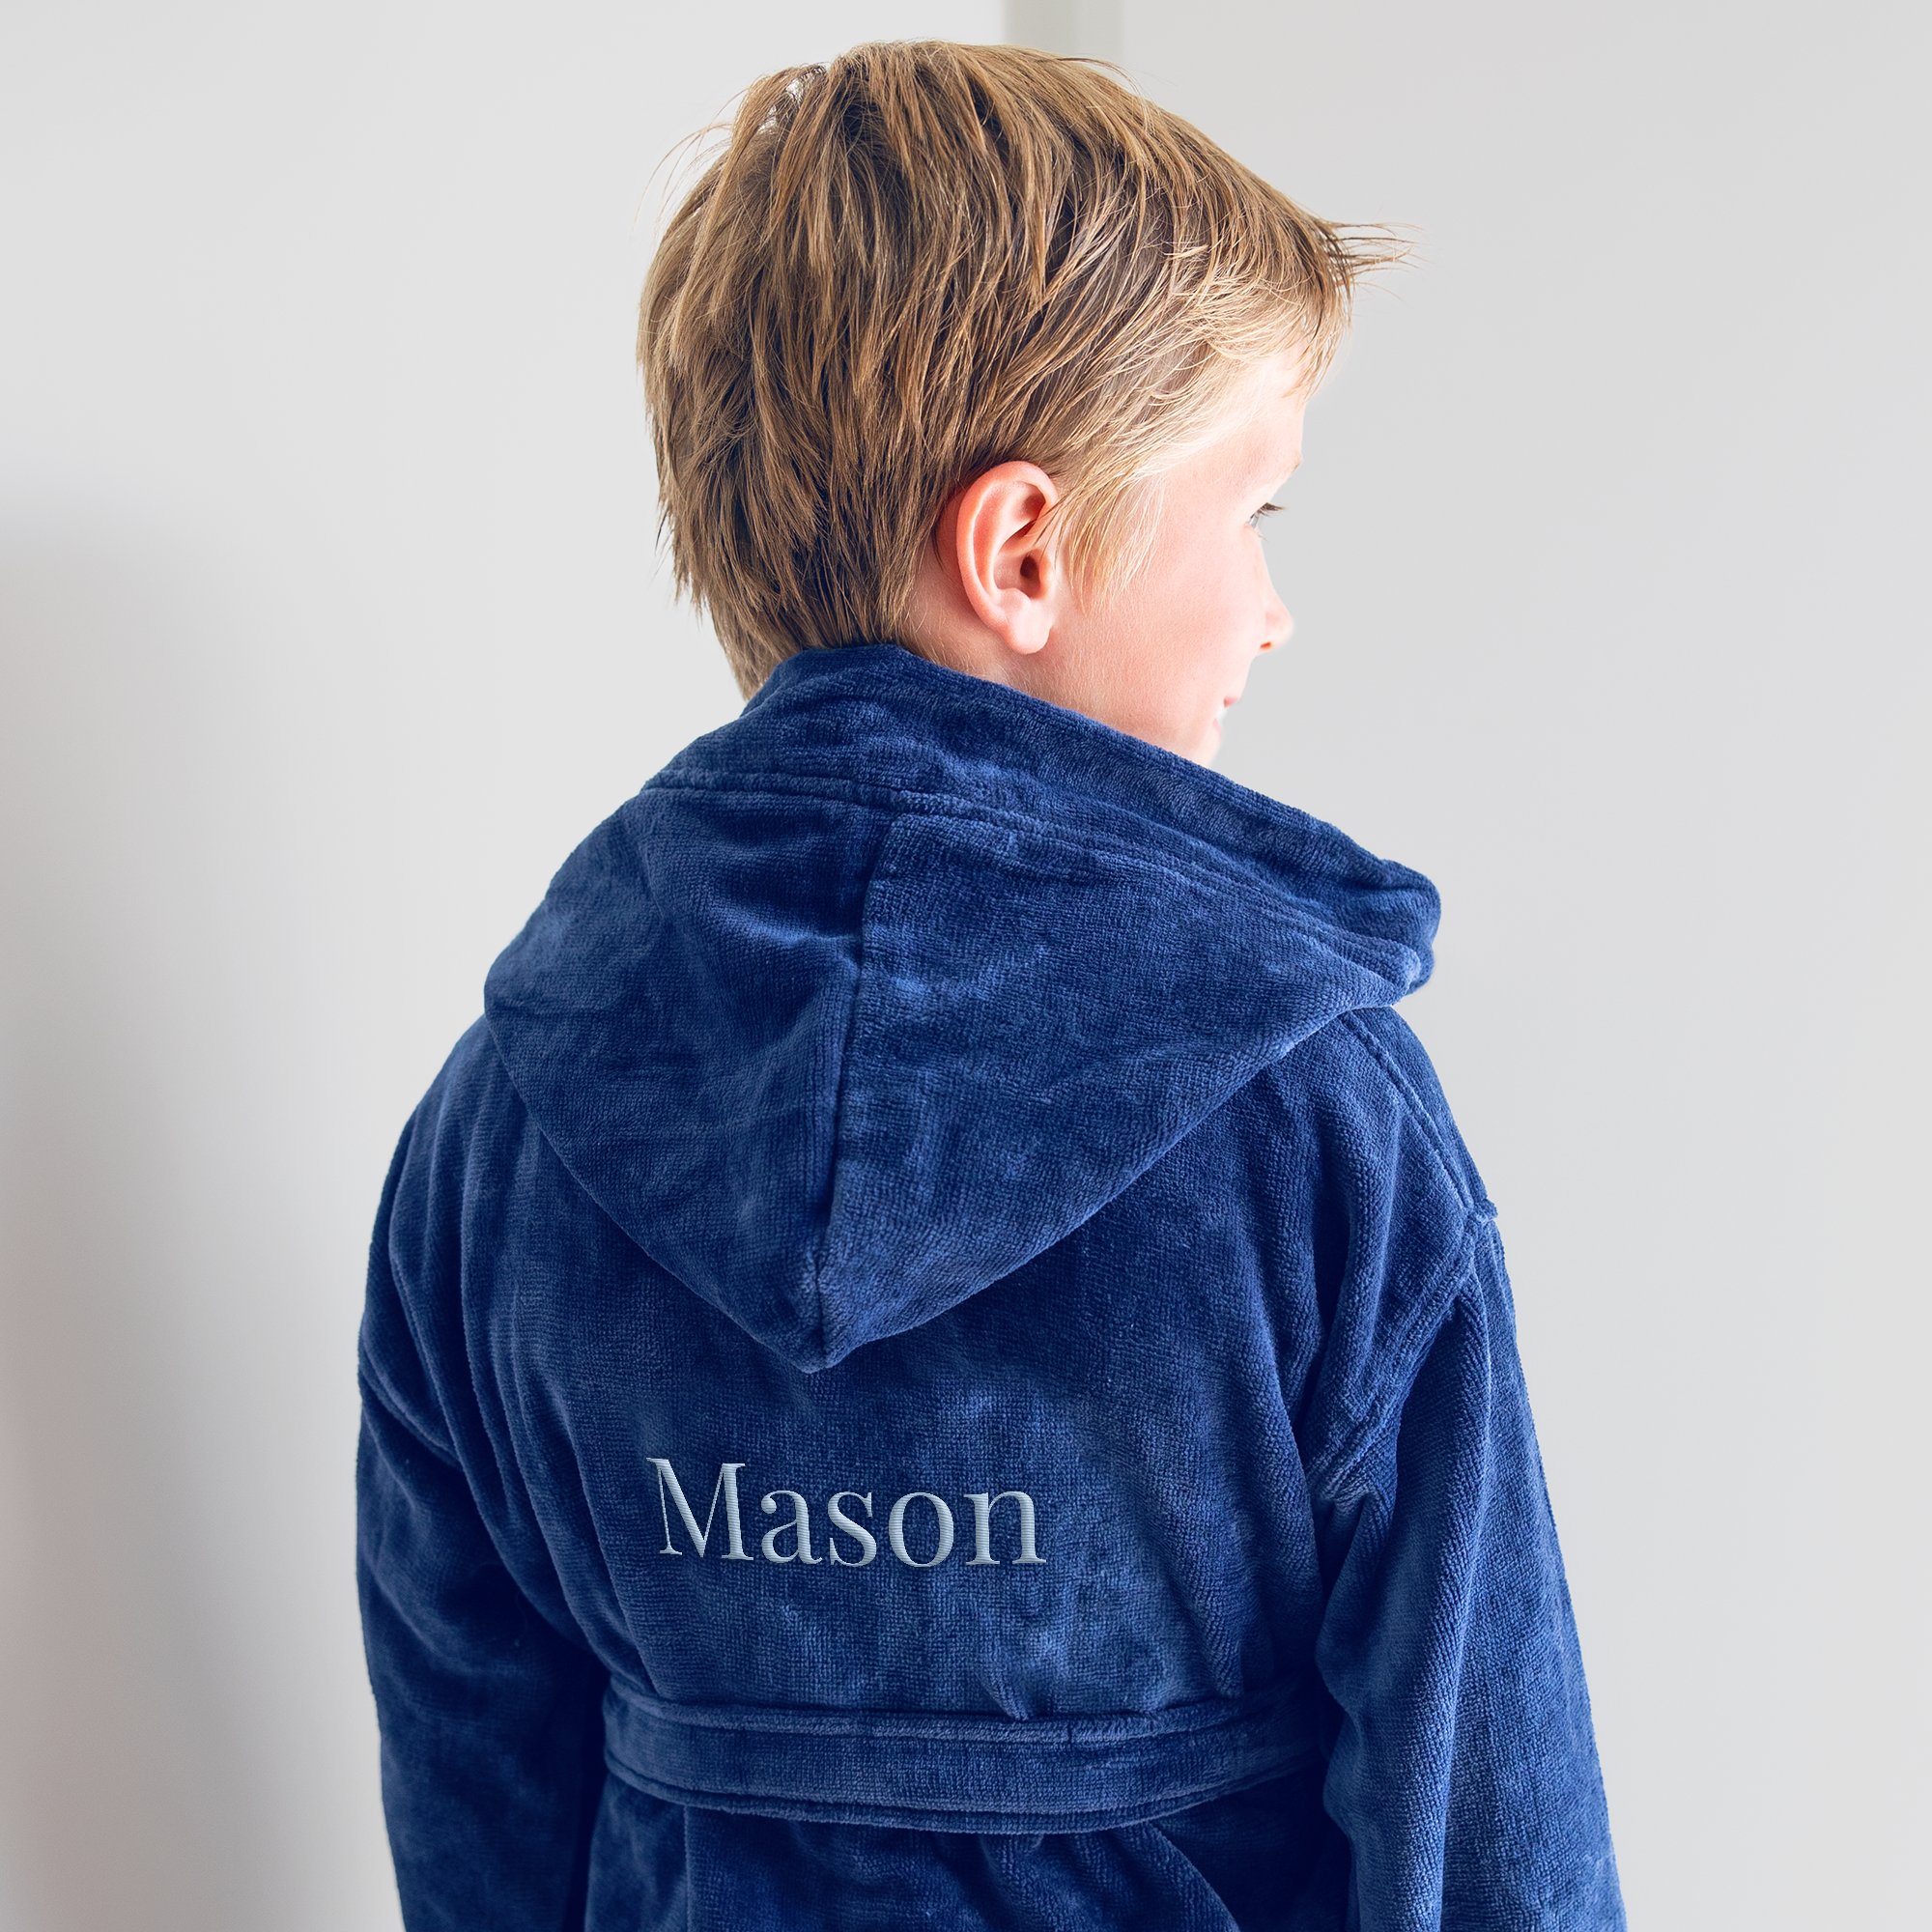 Personalised kids bathrobe - Blue - 2-4 yrs